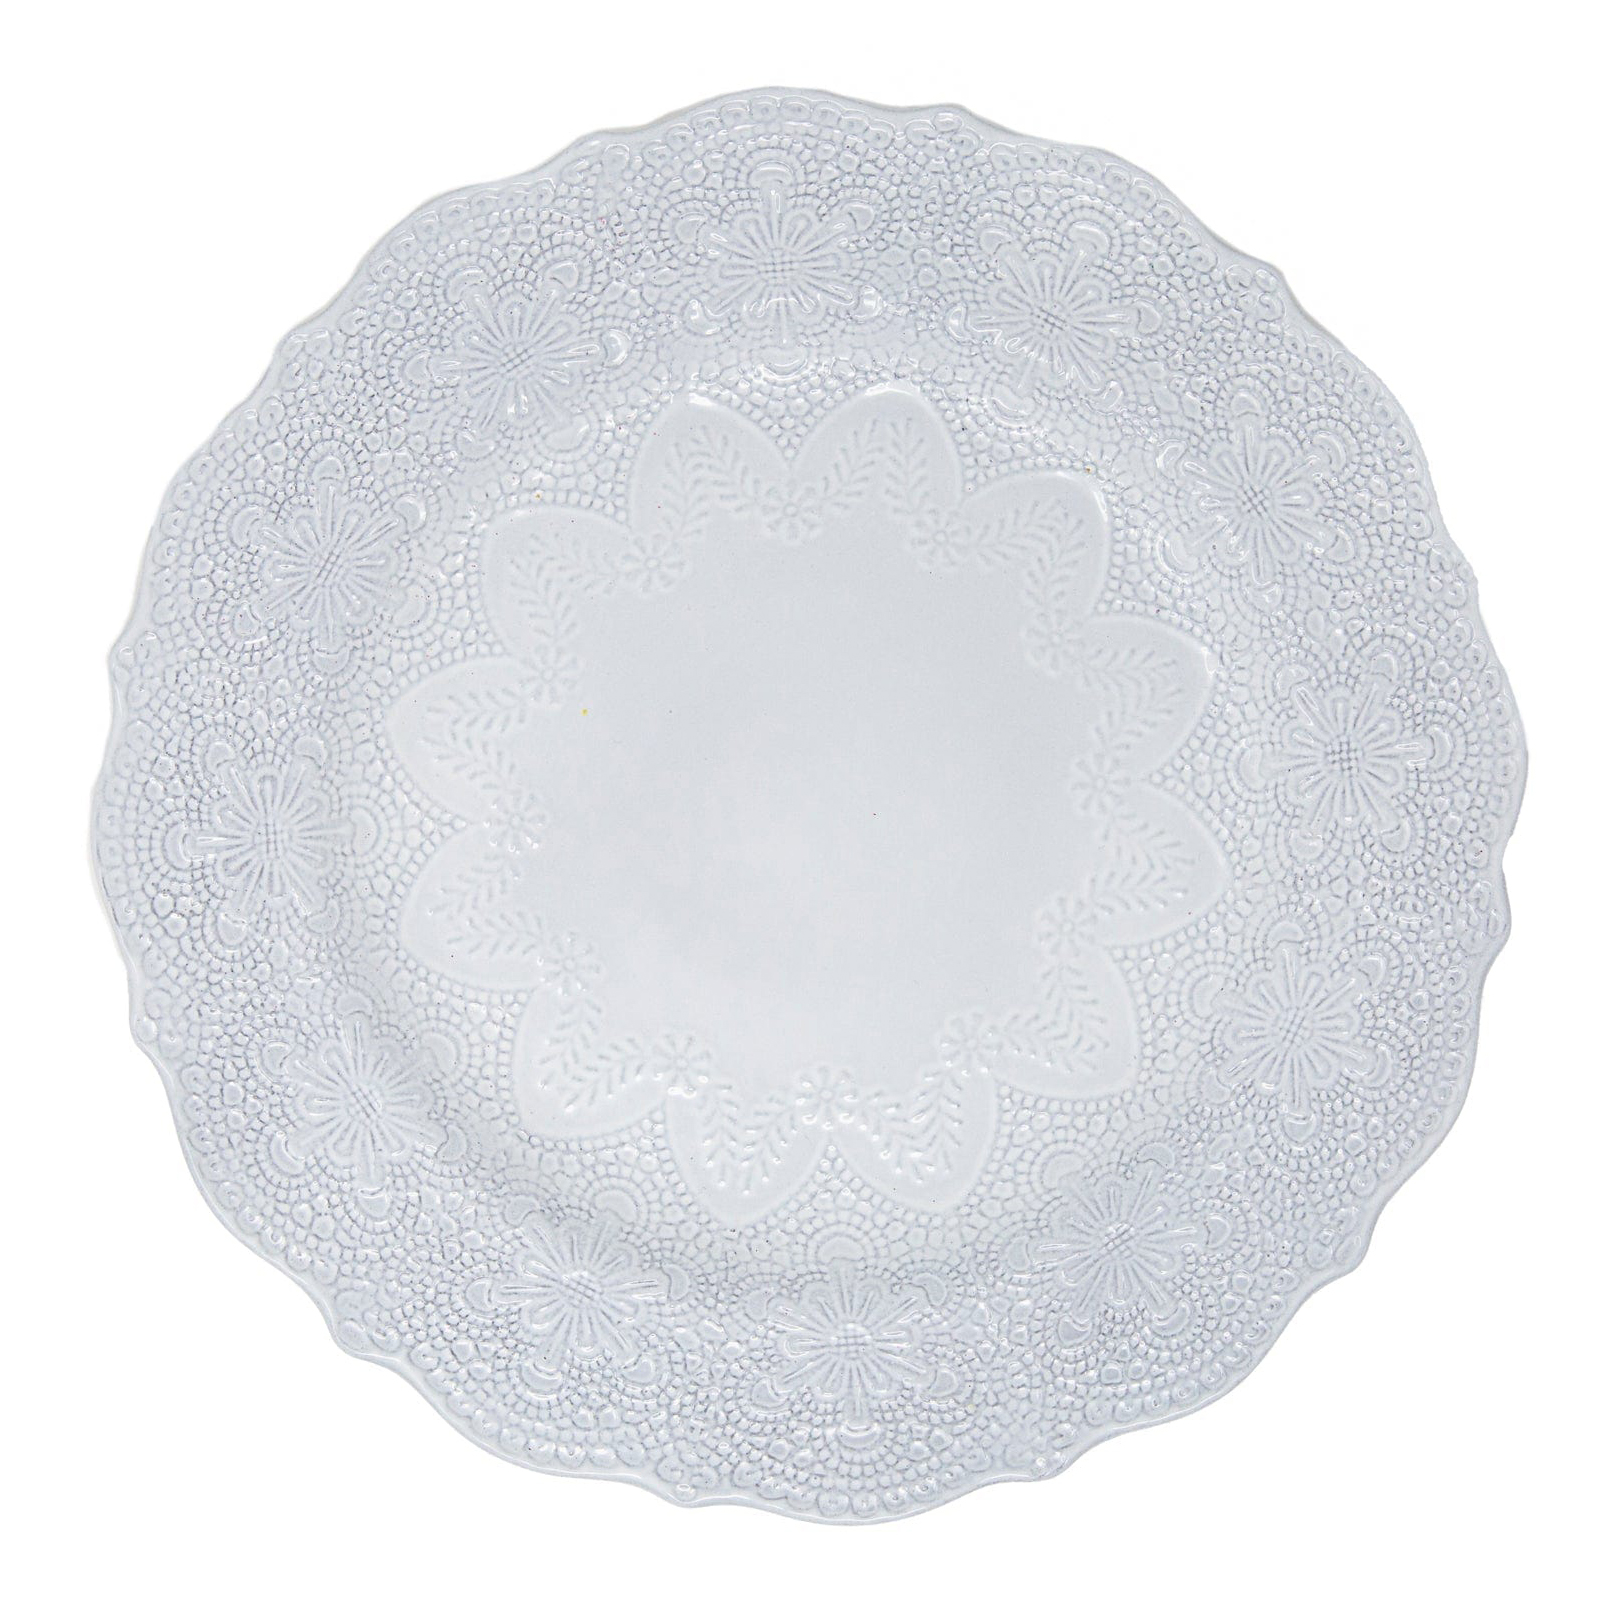 Merletto Dinner Plates by Arte Italica | Fine Linens